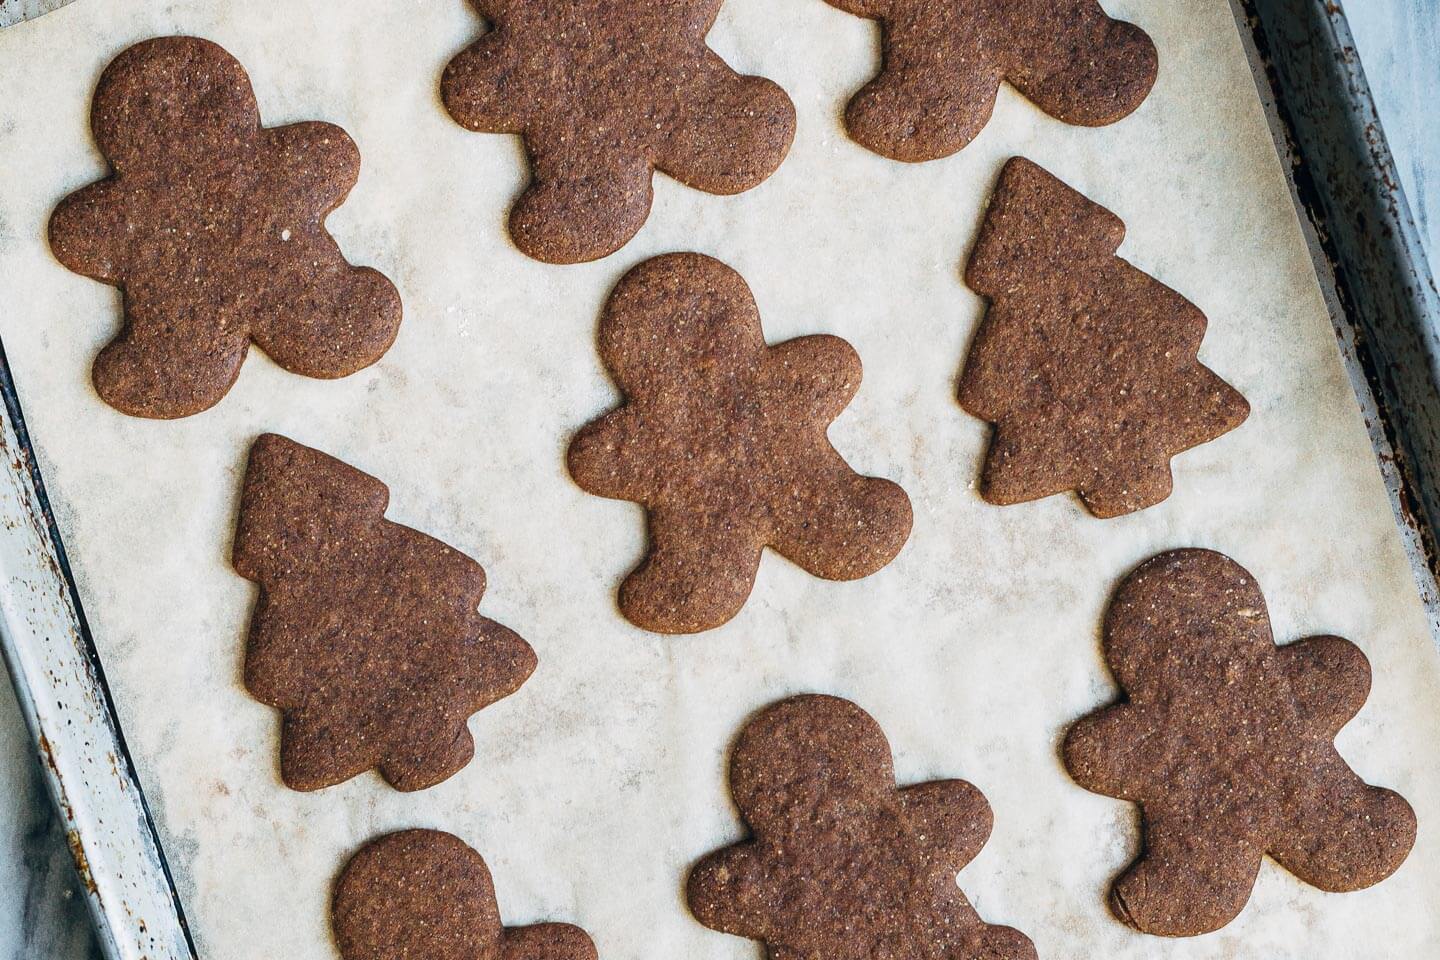 Just-baked gingerbread cookies. 